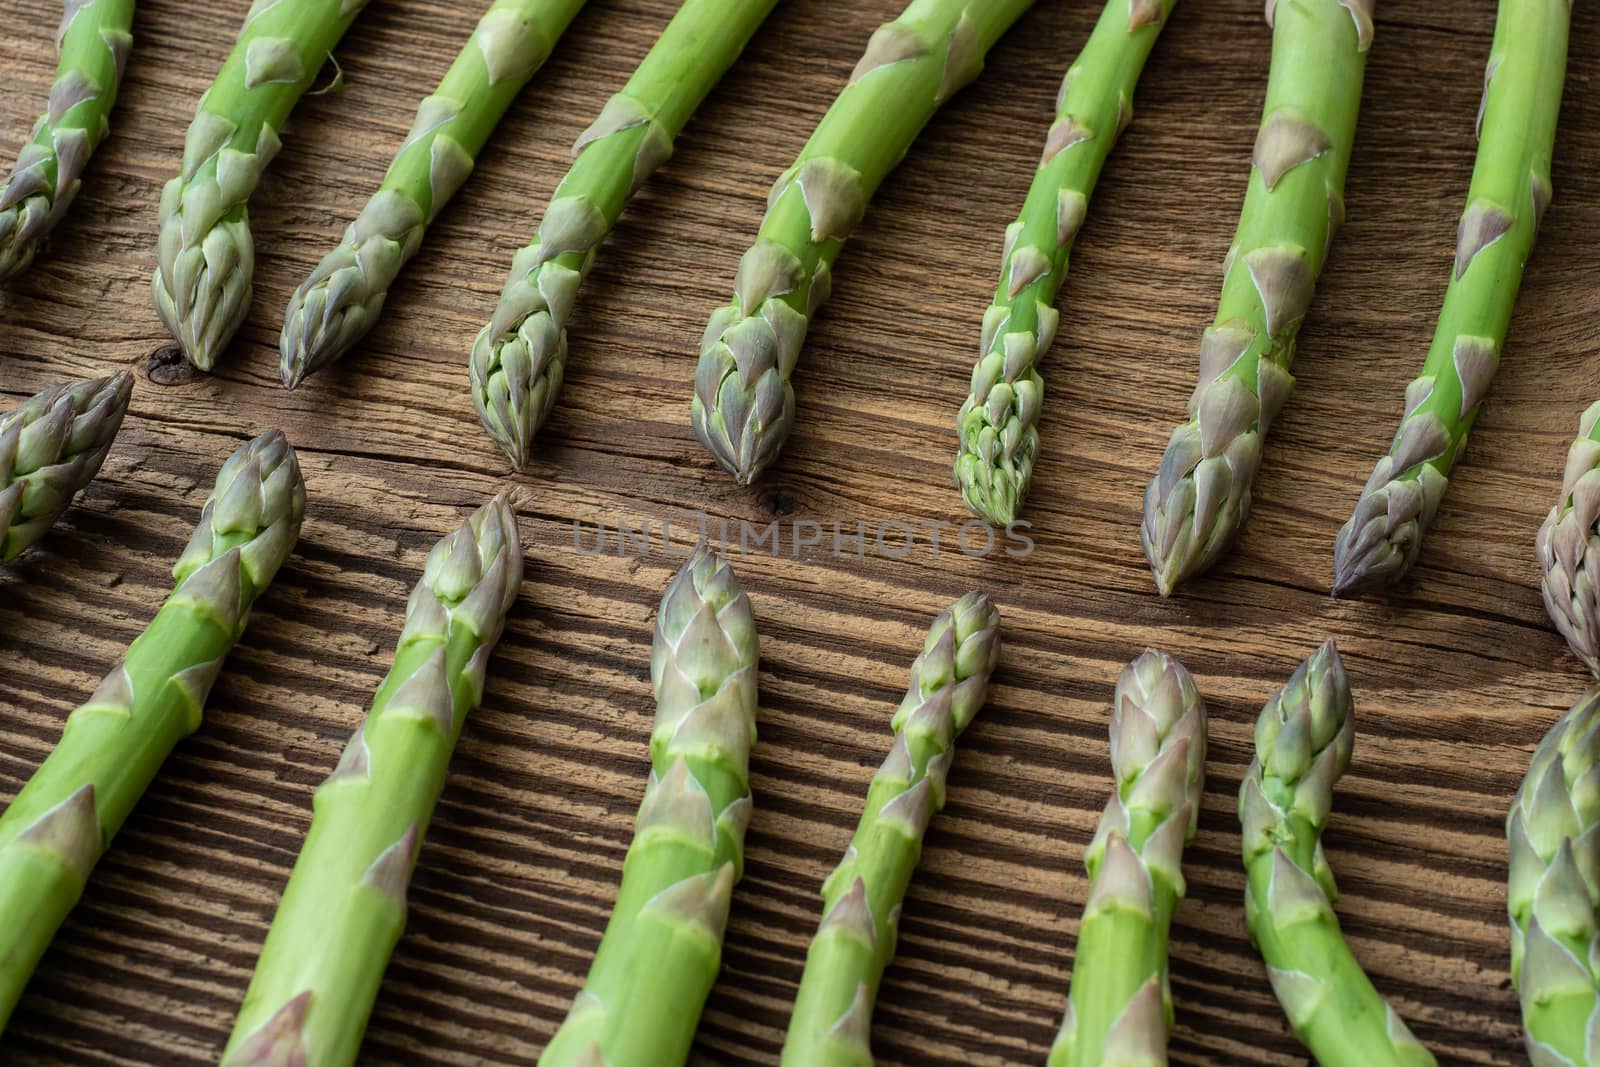 Raw garden asparagus stems. Fresh green spring vegetables on wooden background. (Asparagus officinalis).